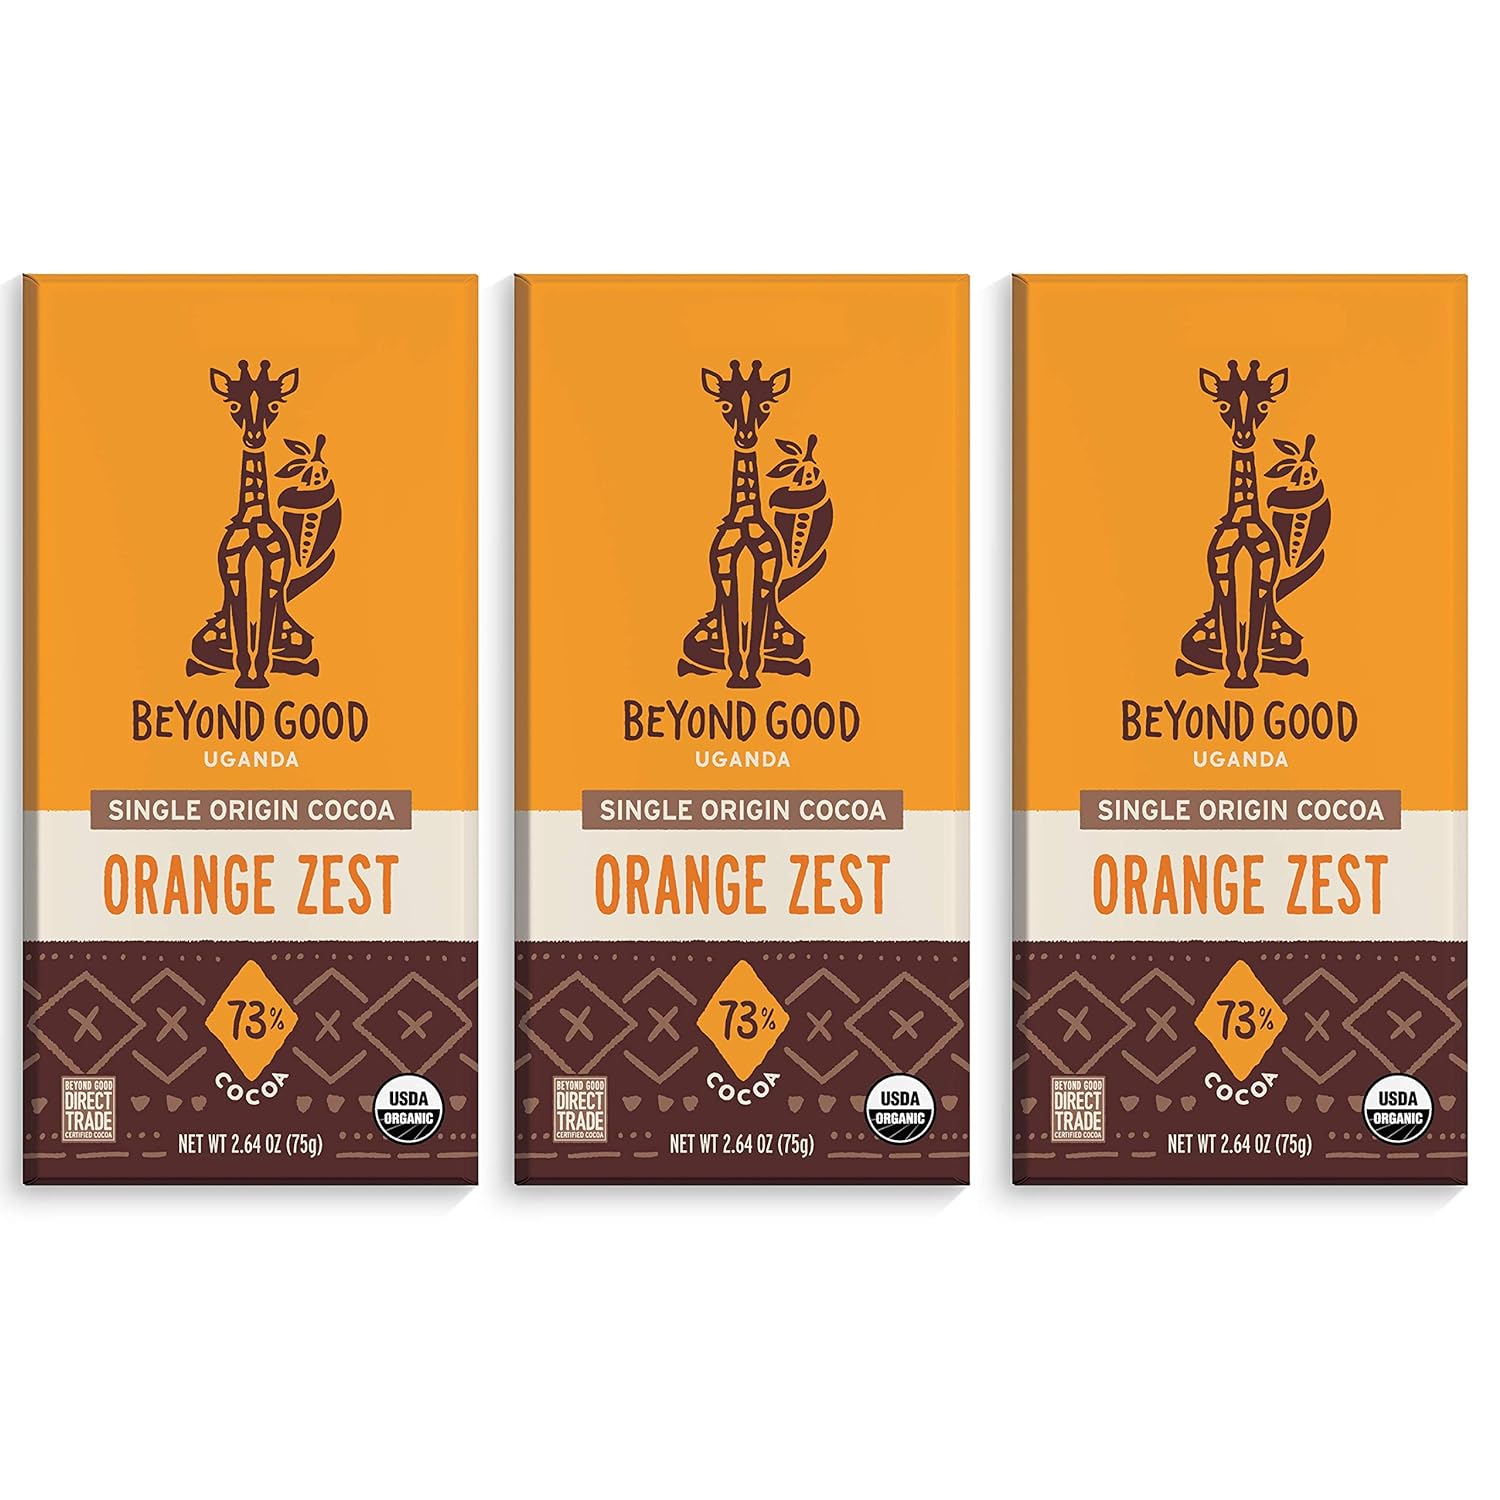  Beyond Good | Sea Salt & Nibs Dark Chocolate Bars, 3 Pack | Easter Chocolate | Organic, Direct Trade, Vegan, Kosher, Non-GMO | Single Origin Madagascar Heirloom Chocolate